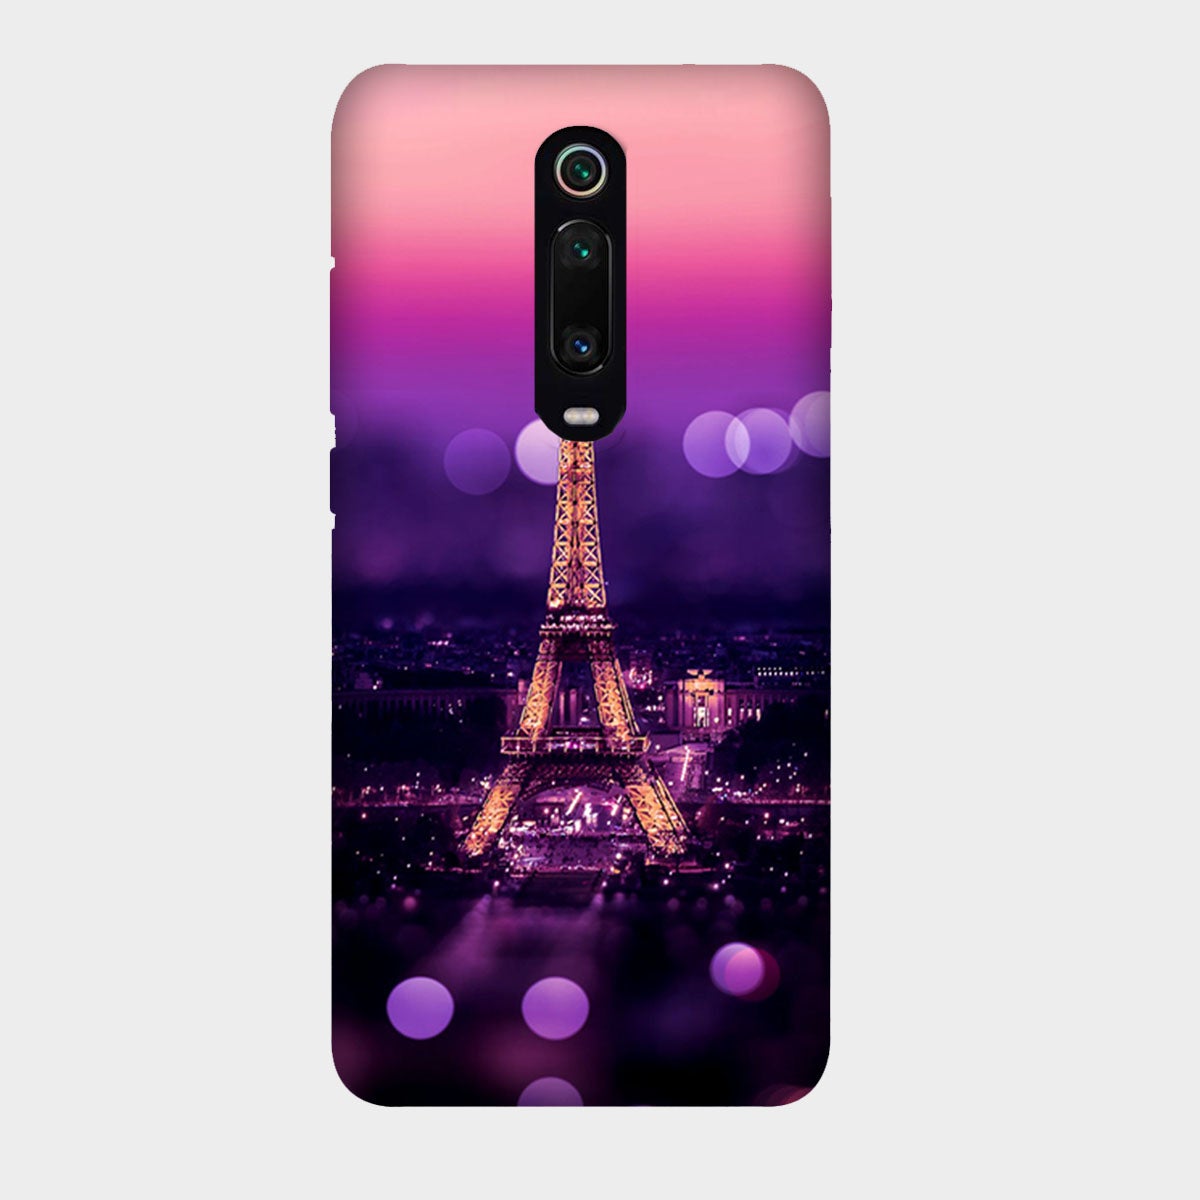 Eifel Tower - Paris - Mobile Phone Cover - Hard Case